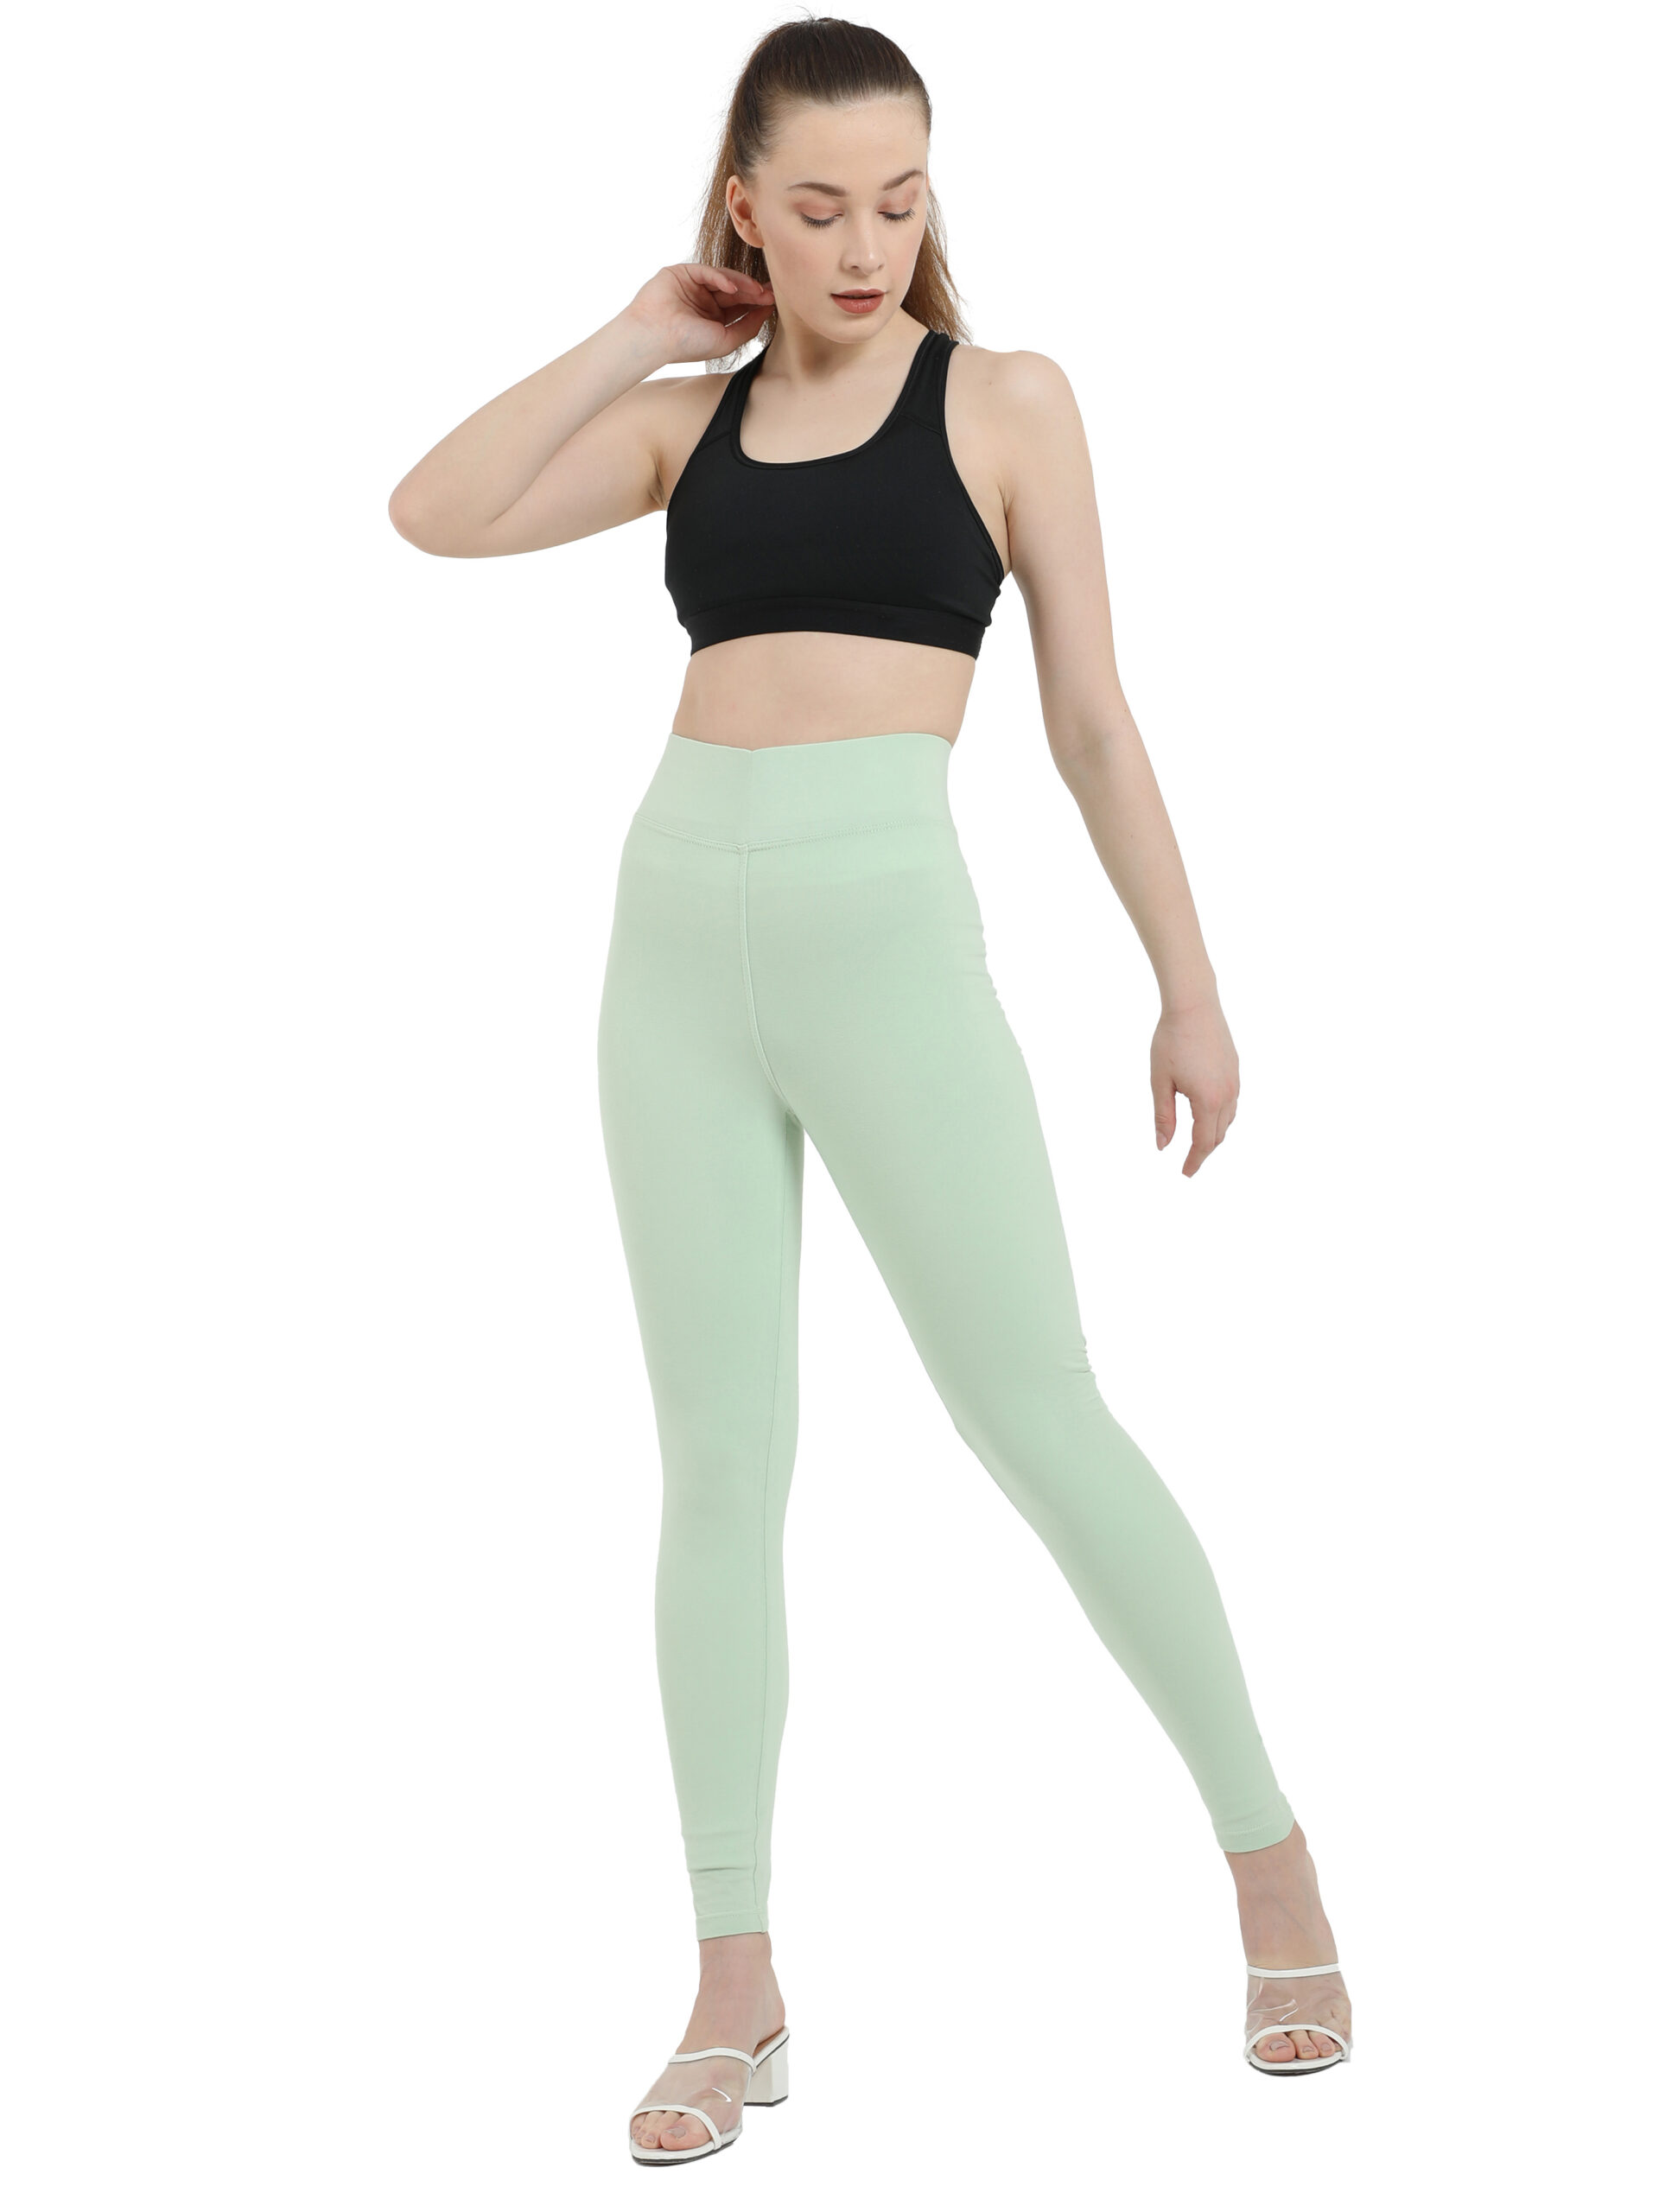 Pistachio leggings for women Compression pant high waist - Belore